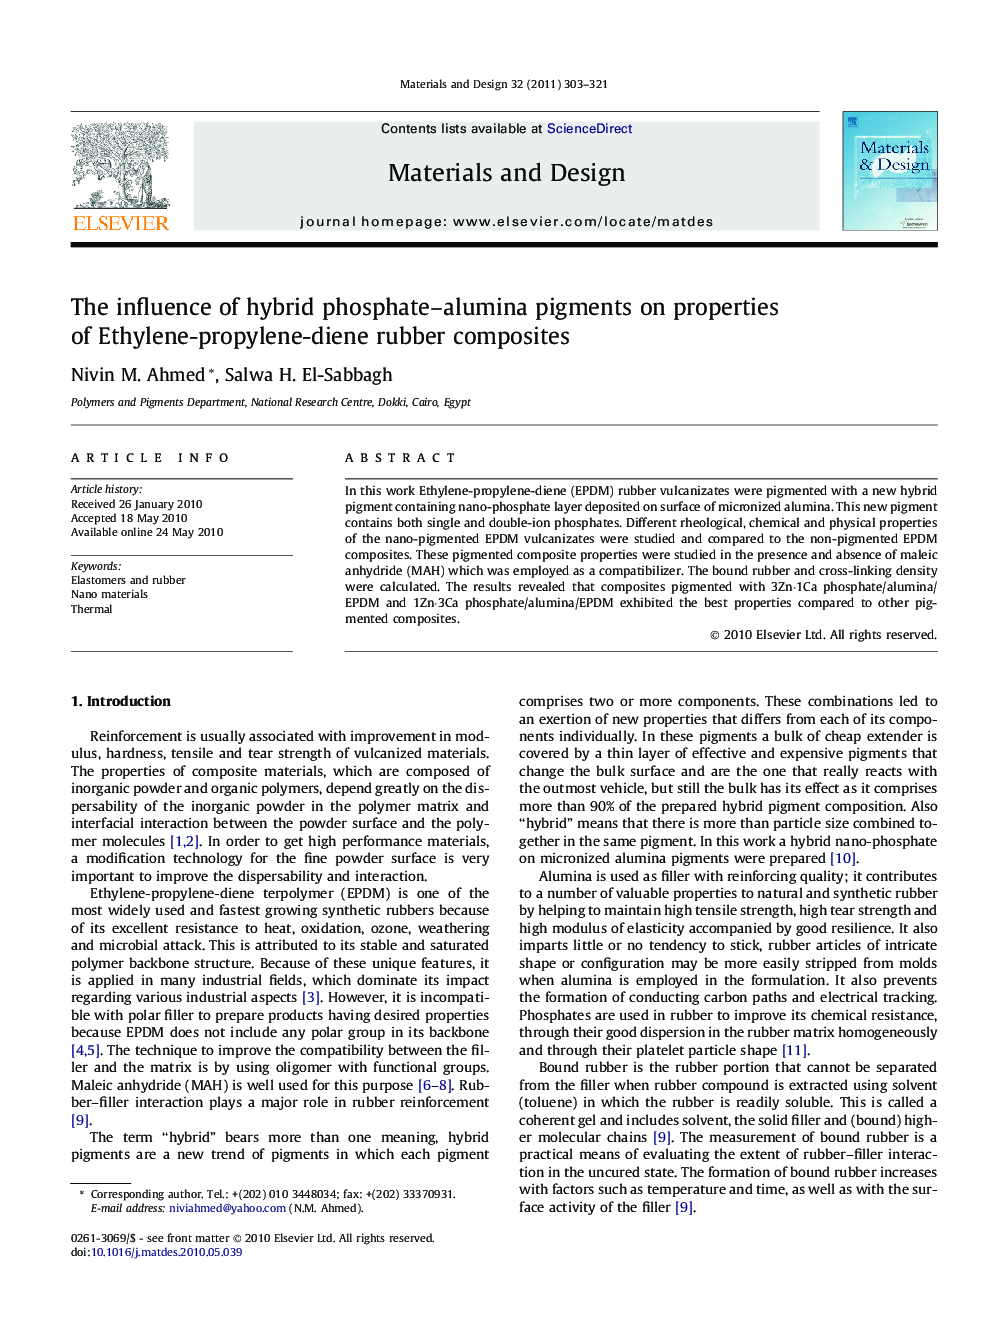 The influence of hybrid phosphate–alumina pigments on properties of Ethylene-propylene-diene rubber composites